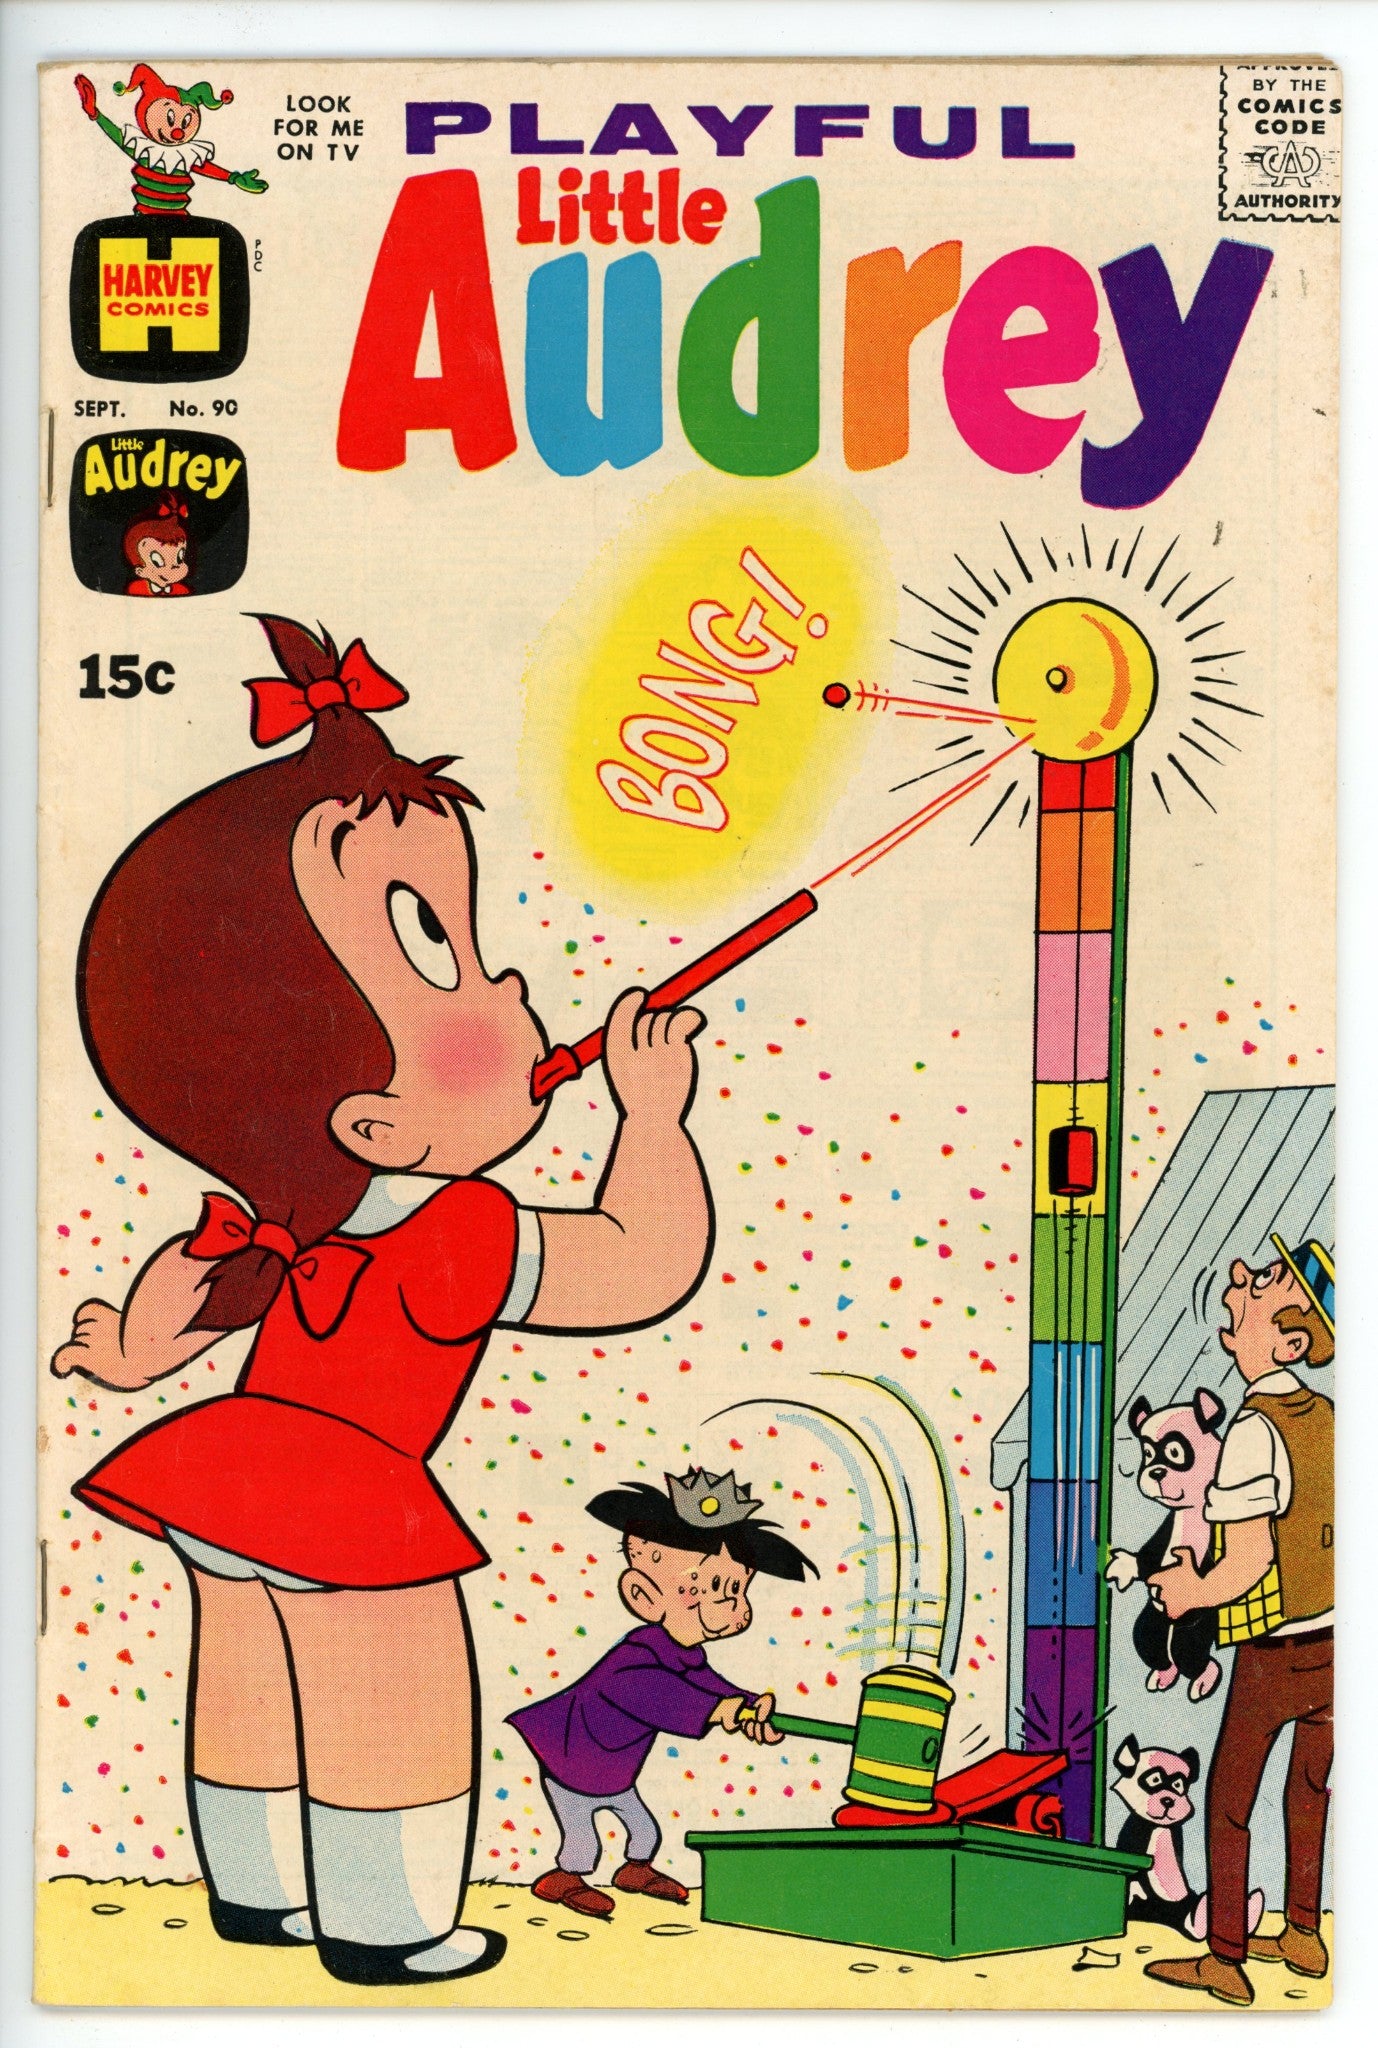 Playful Little Audrey 90-Harvey Comics-CaptCan Comics Inc